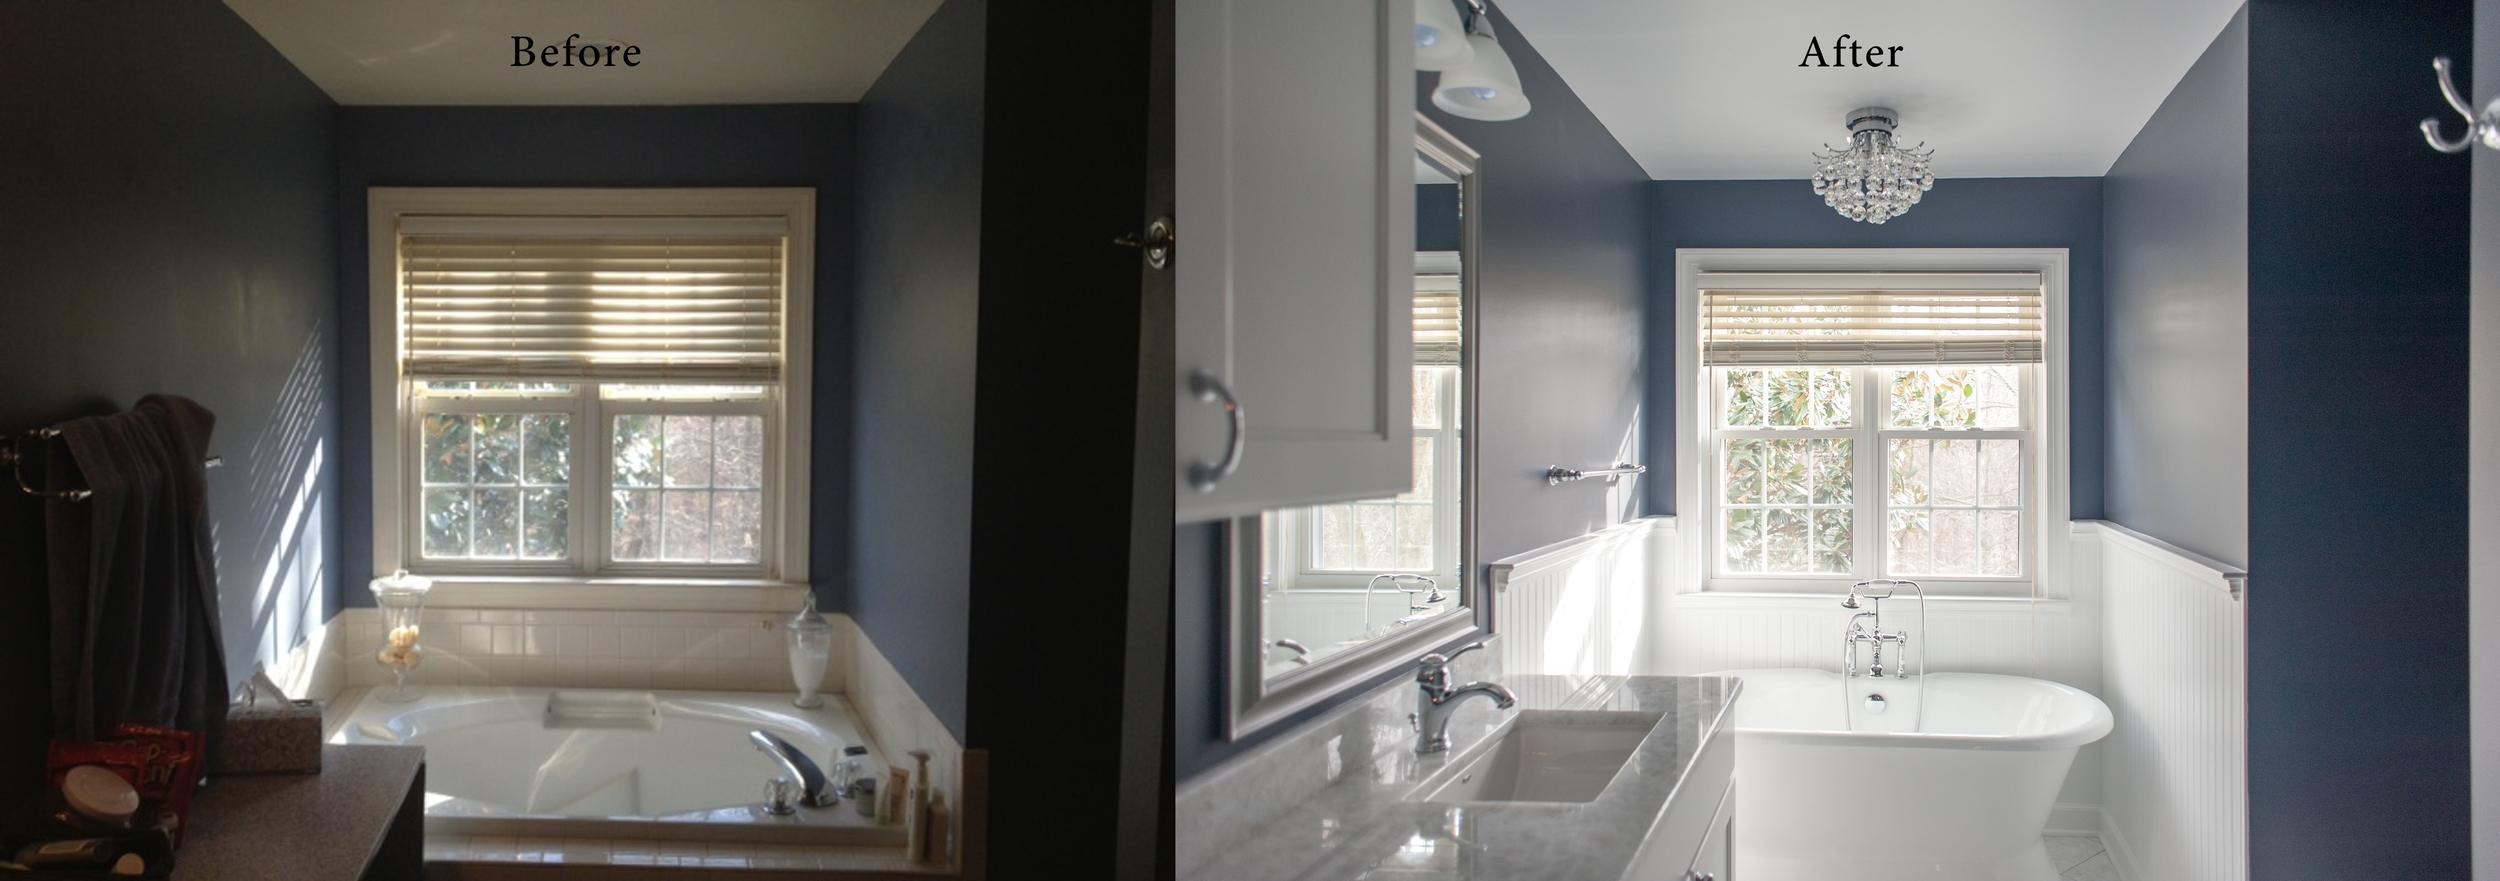 Bathroom renovation Silver Spring, MD 